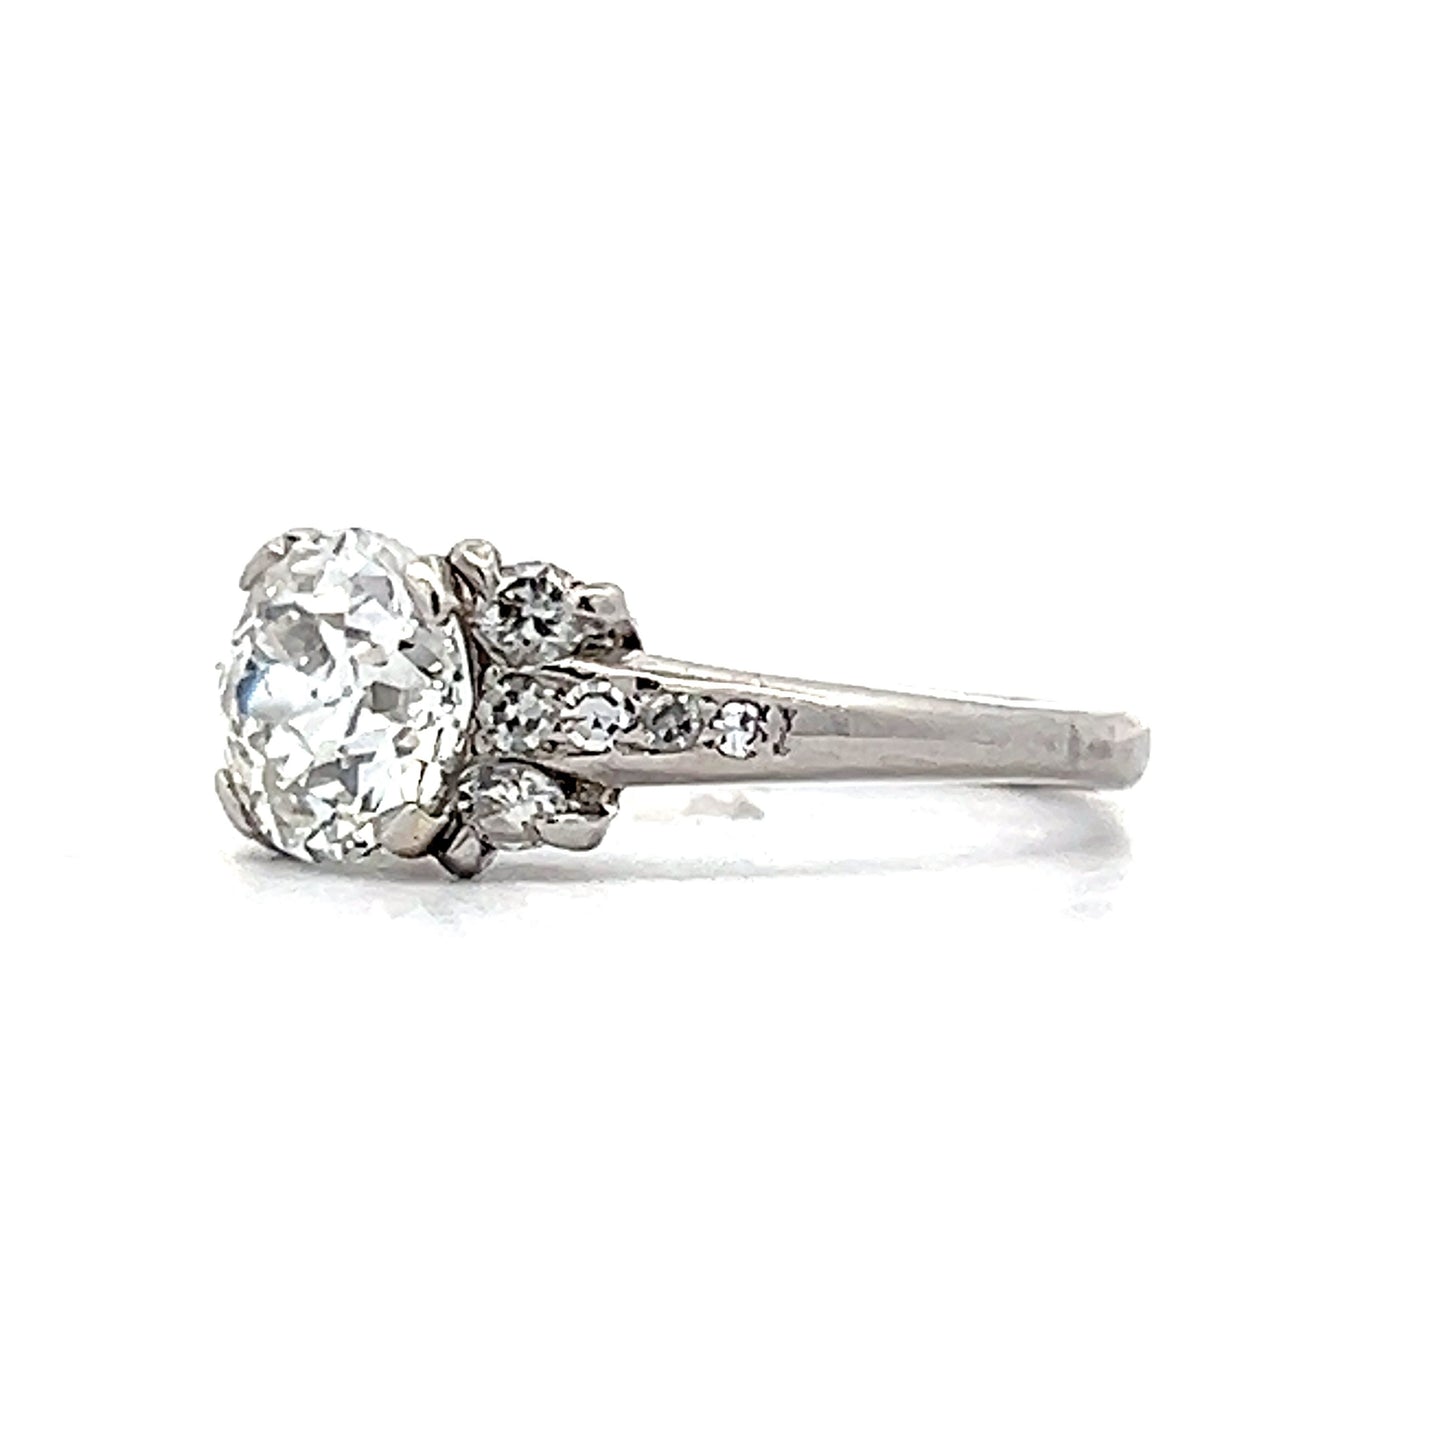 1.26 Vintage Old European Diamond Engagement Ring in Platinum